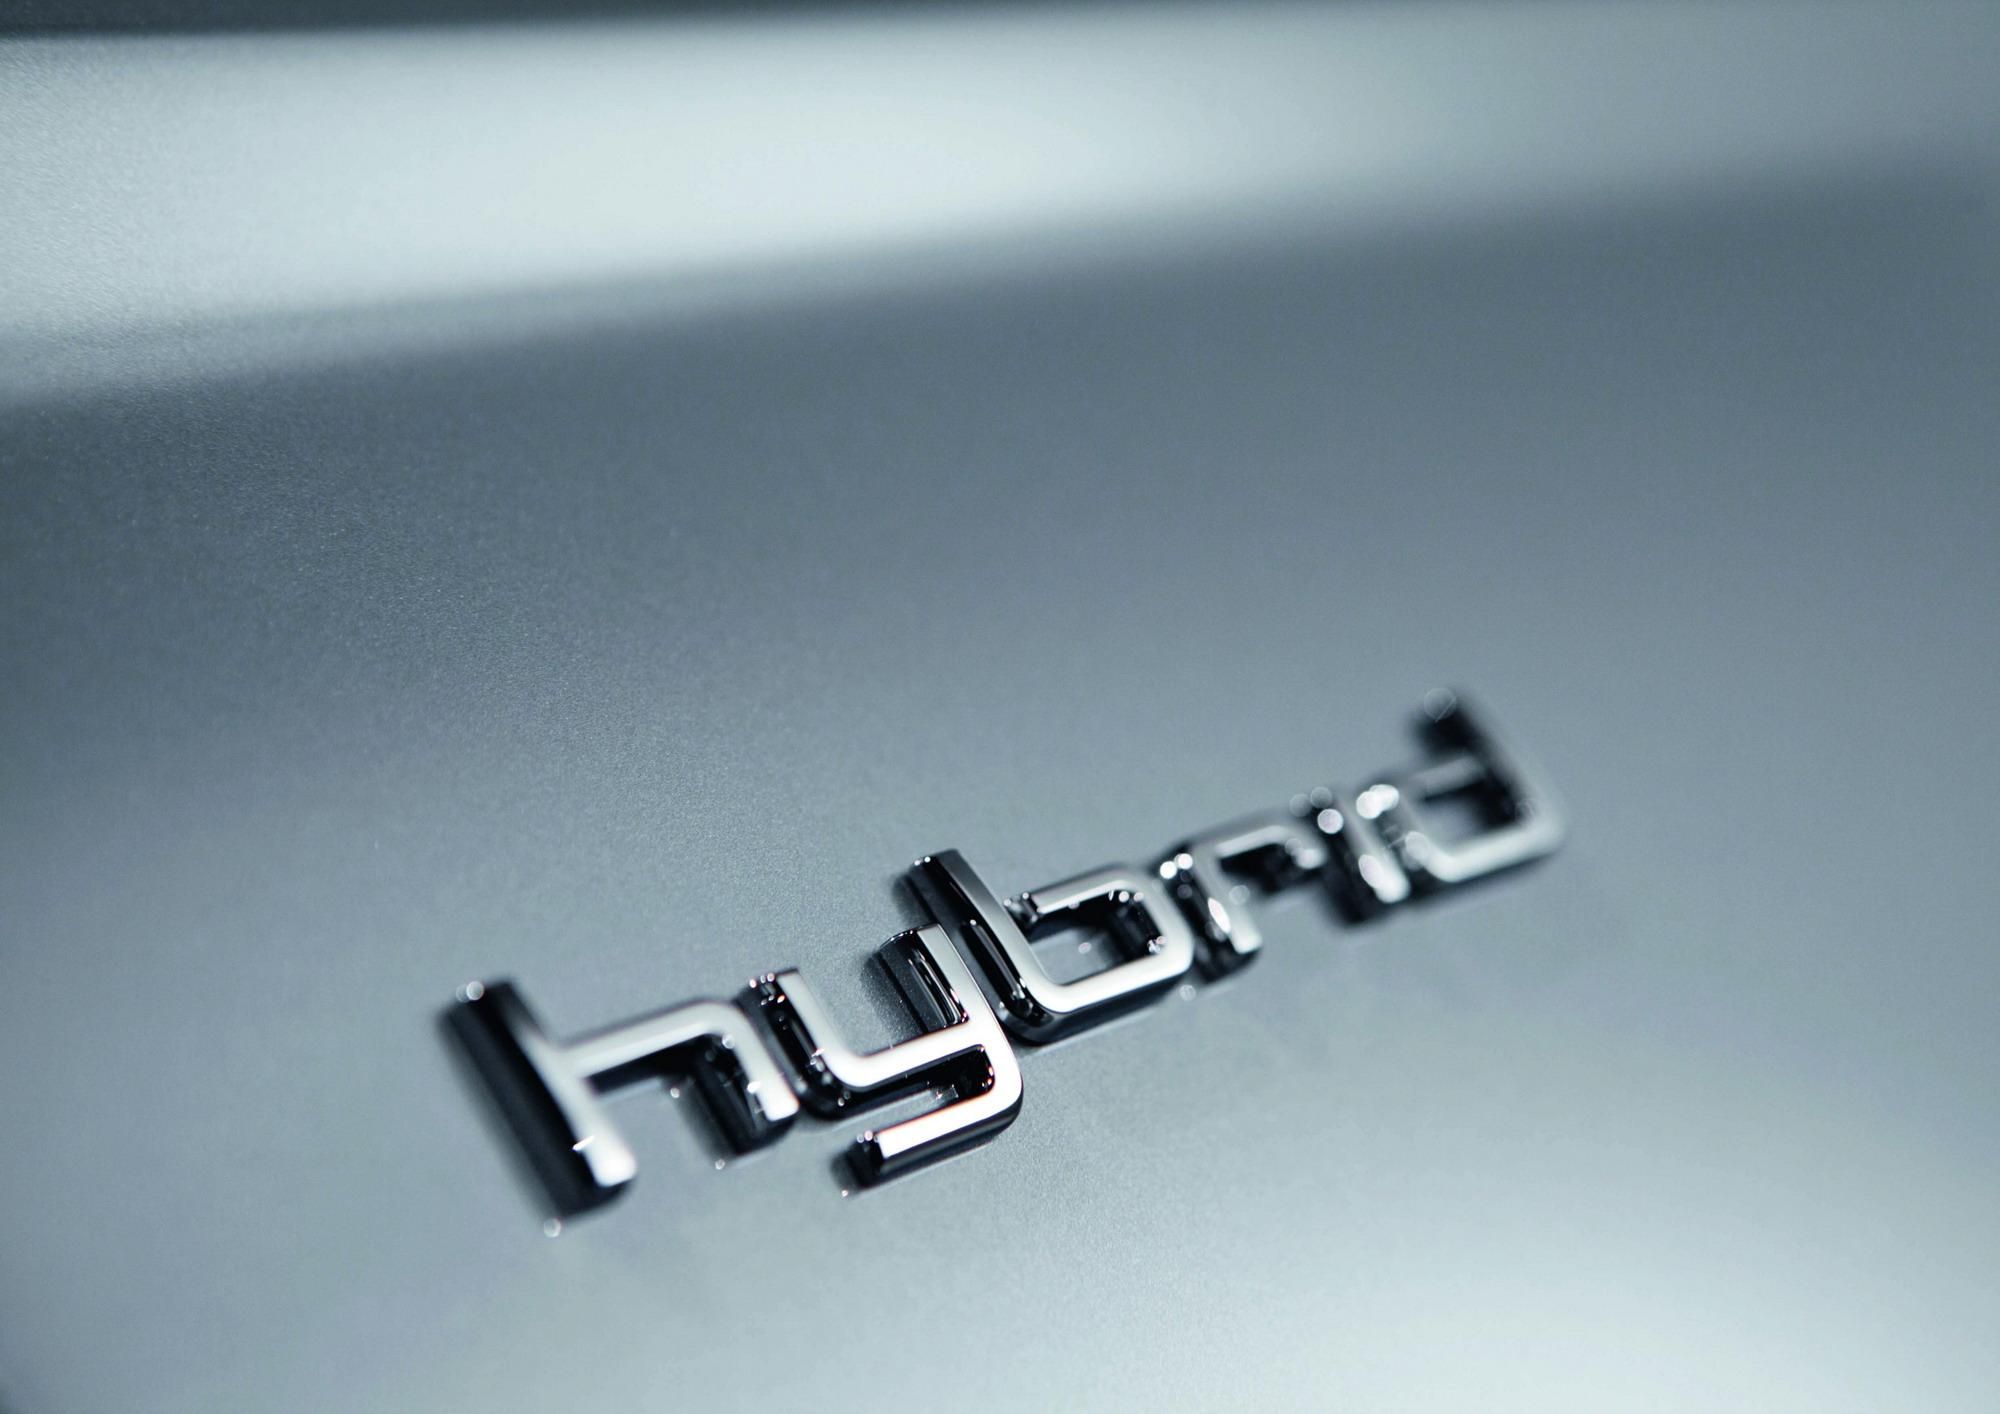 2012 Audi A6 Hybrid